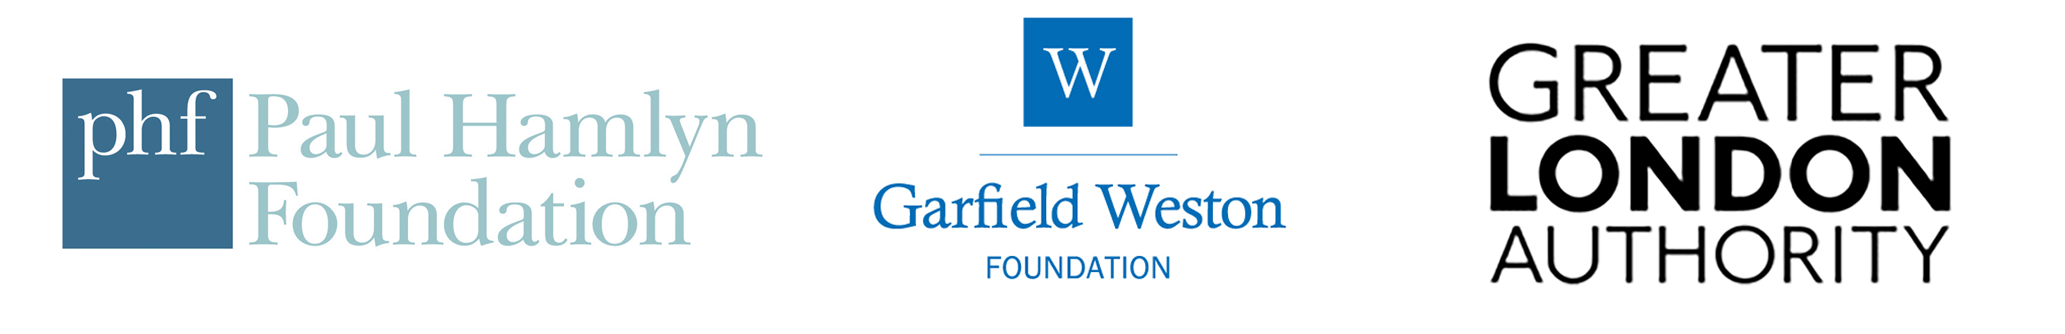 Paul Hamlyn Foundation, Greater London Authority, Garfield Weston Foundation